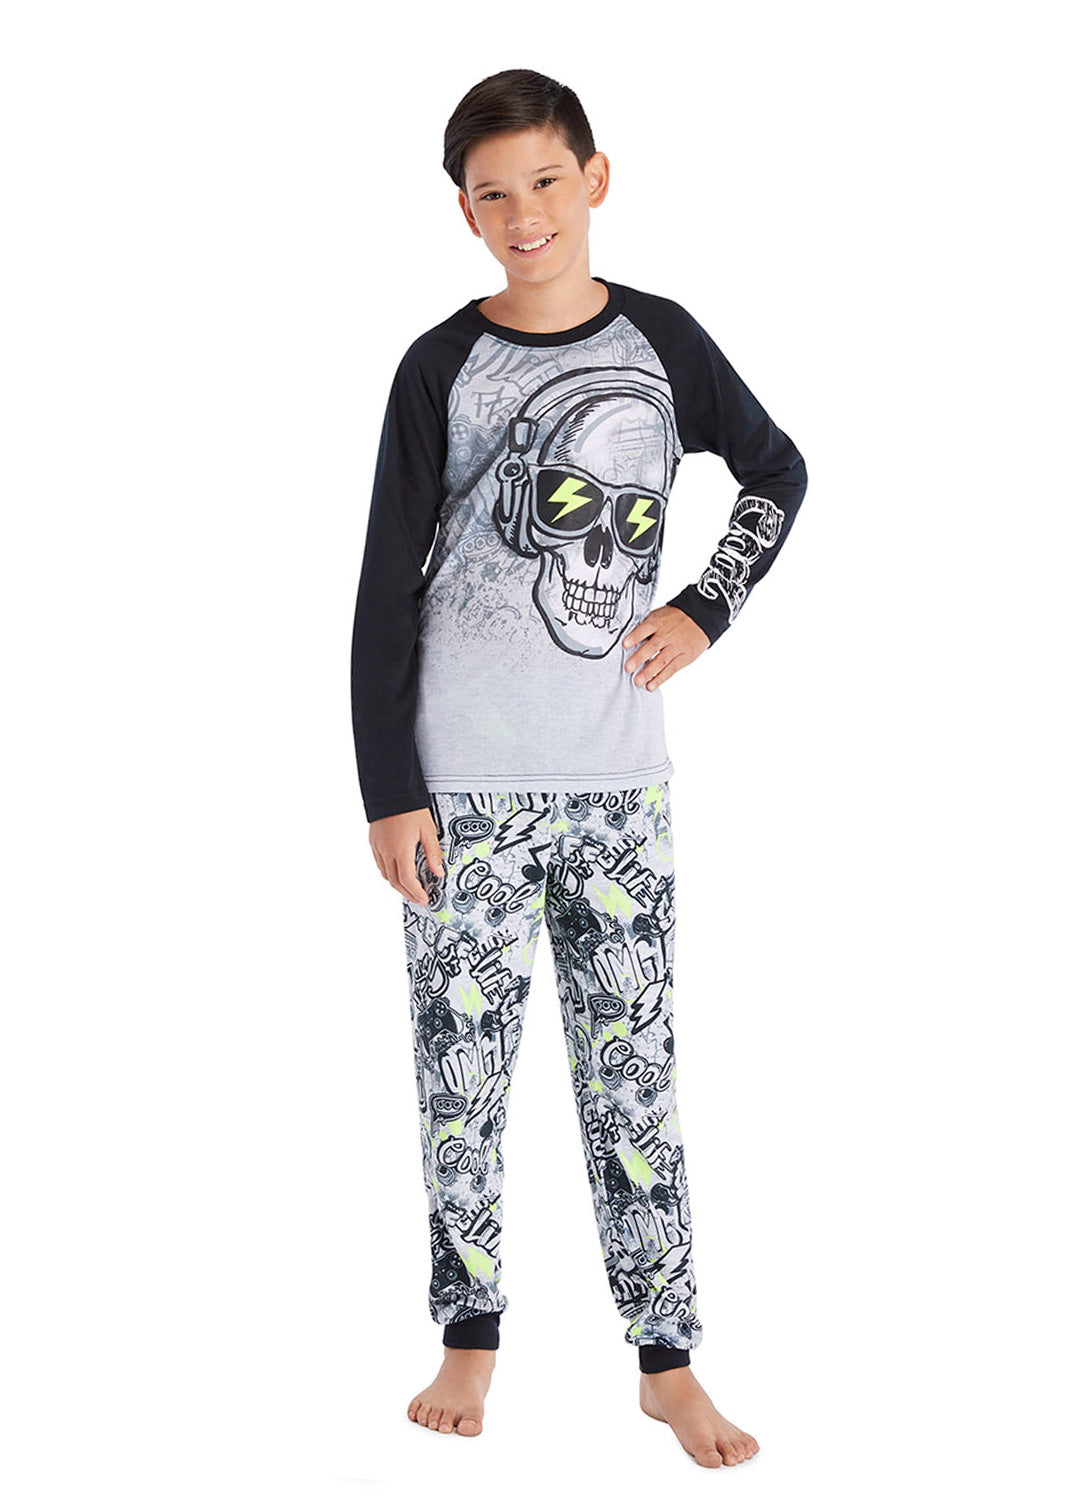 Boy wearing Skull Pajama Set in Black colour